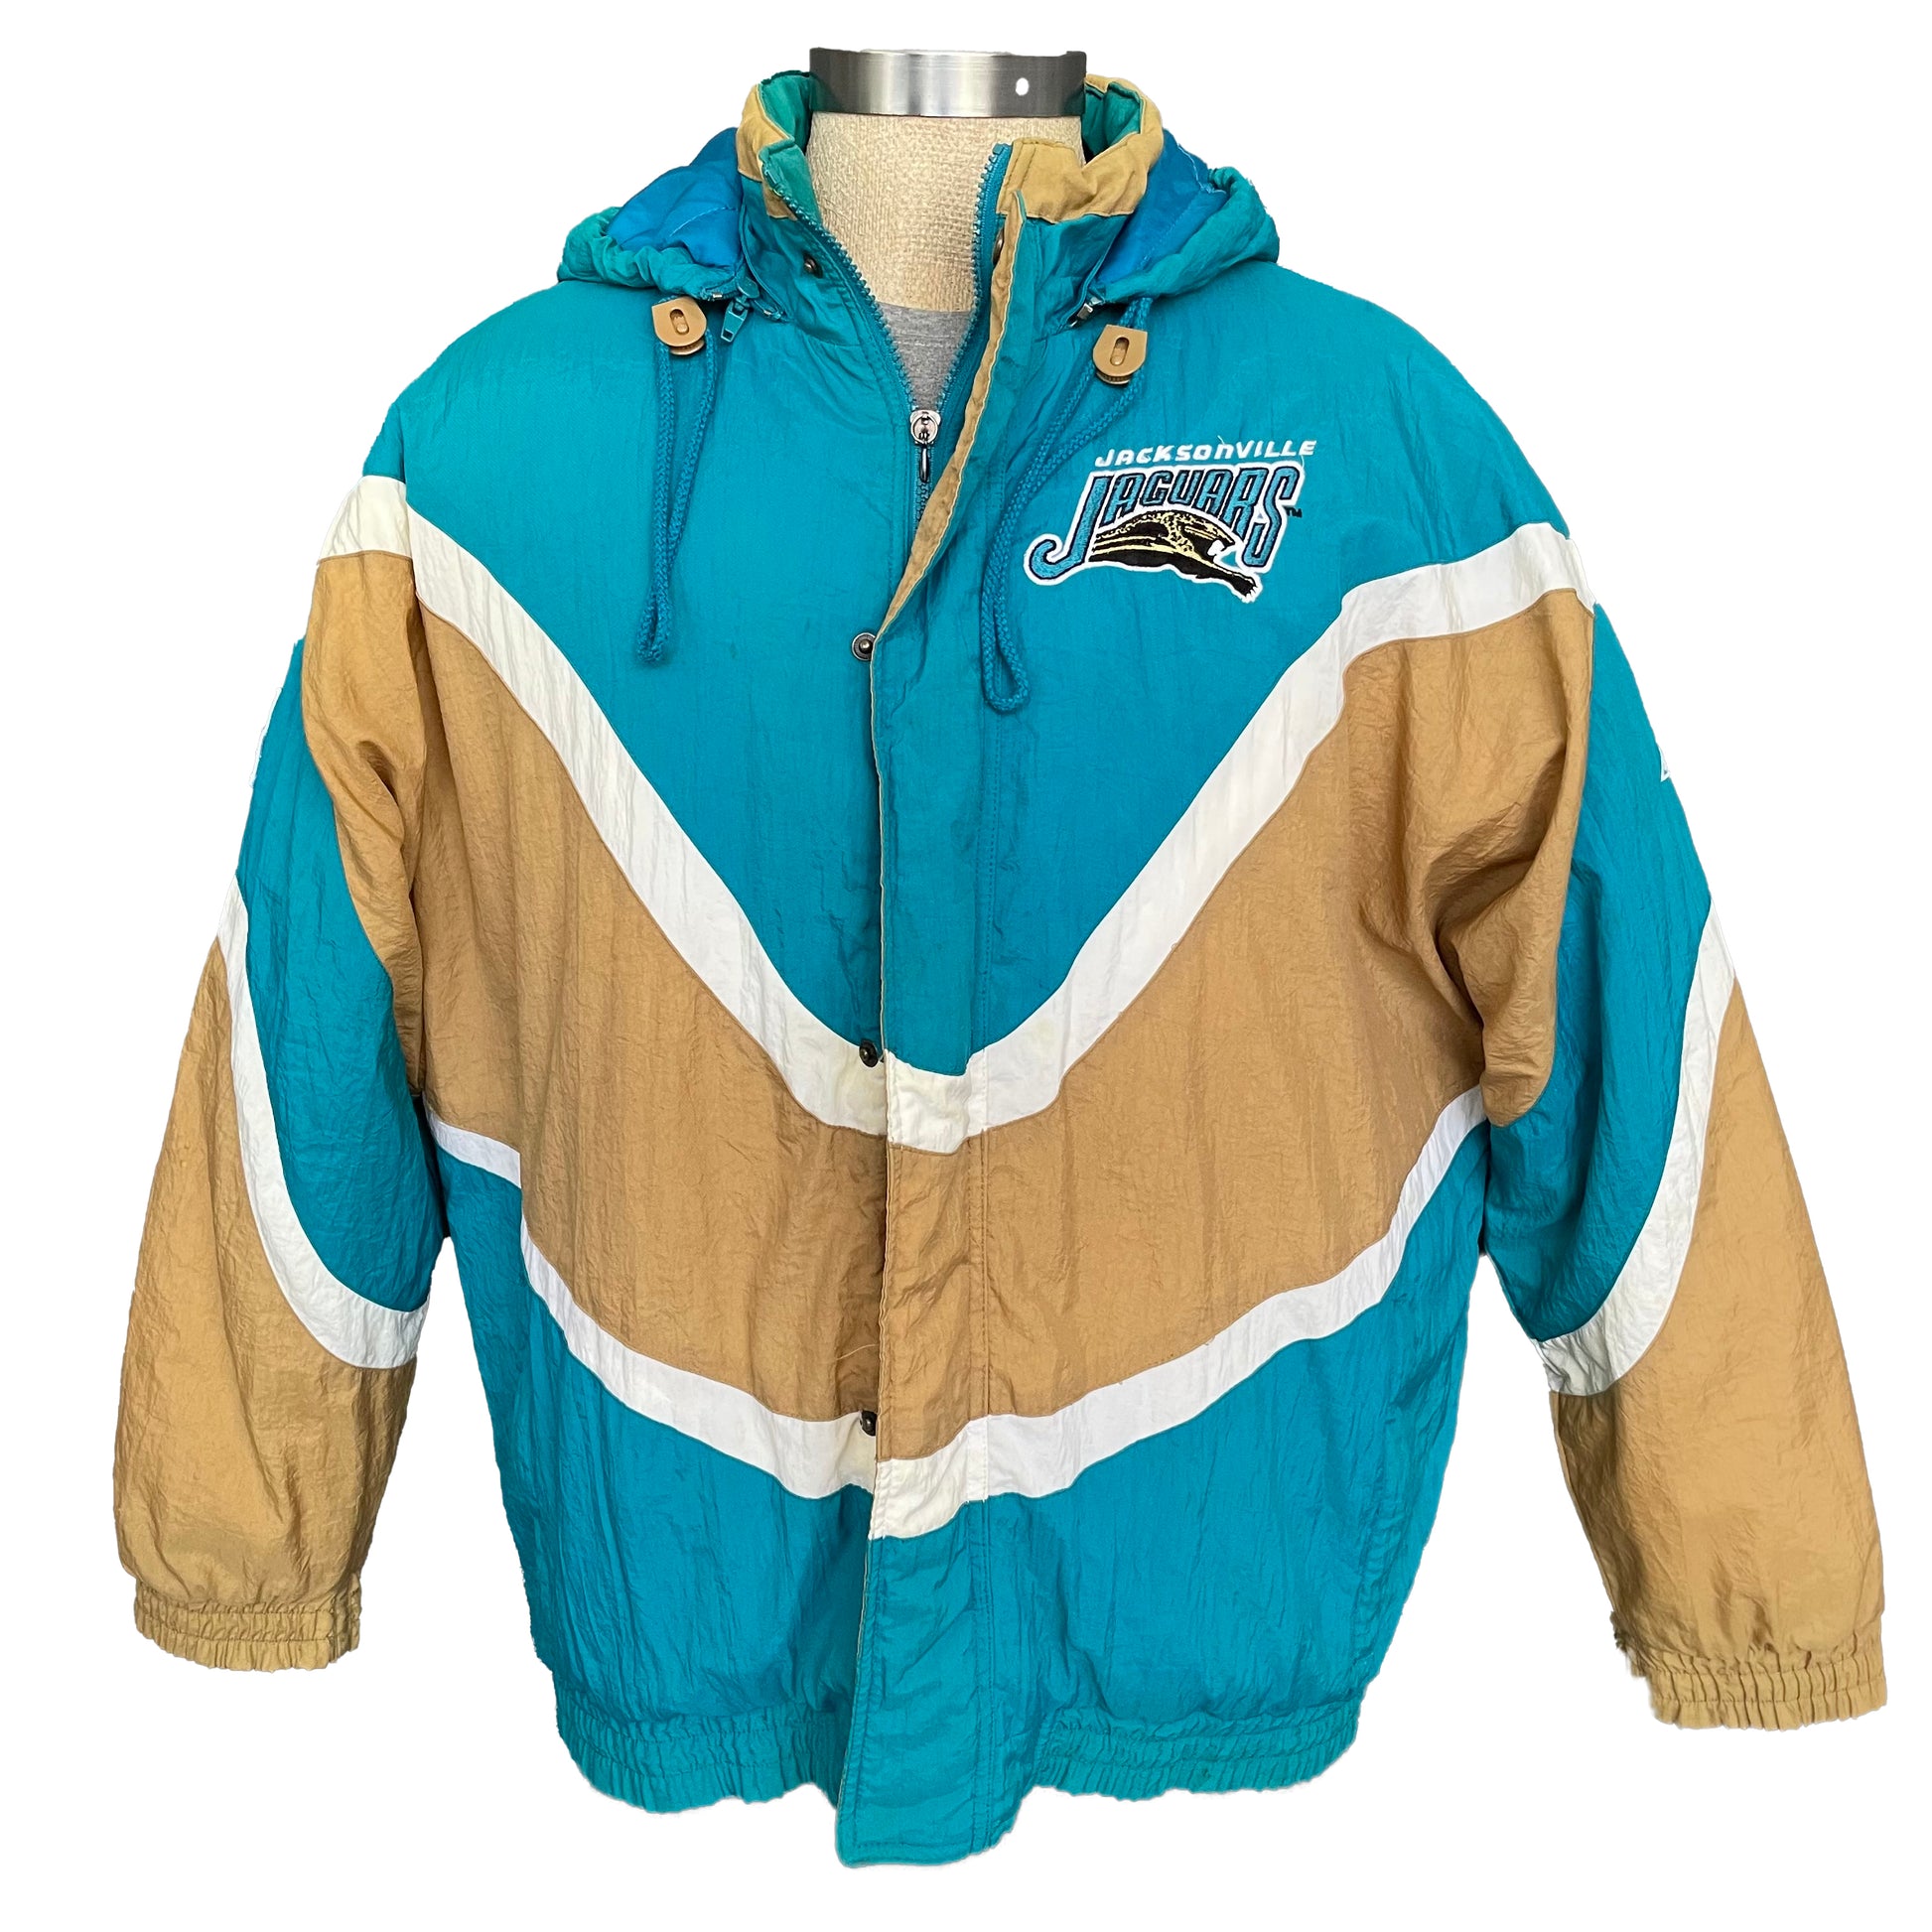 Jacksonville Jaguars APEX banned logo puffer jacket size LARGE